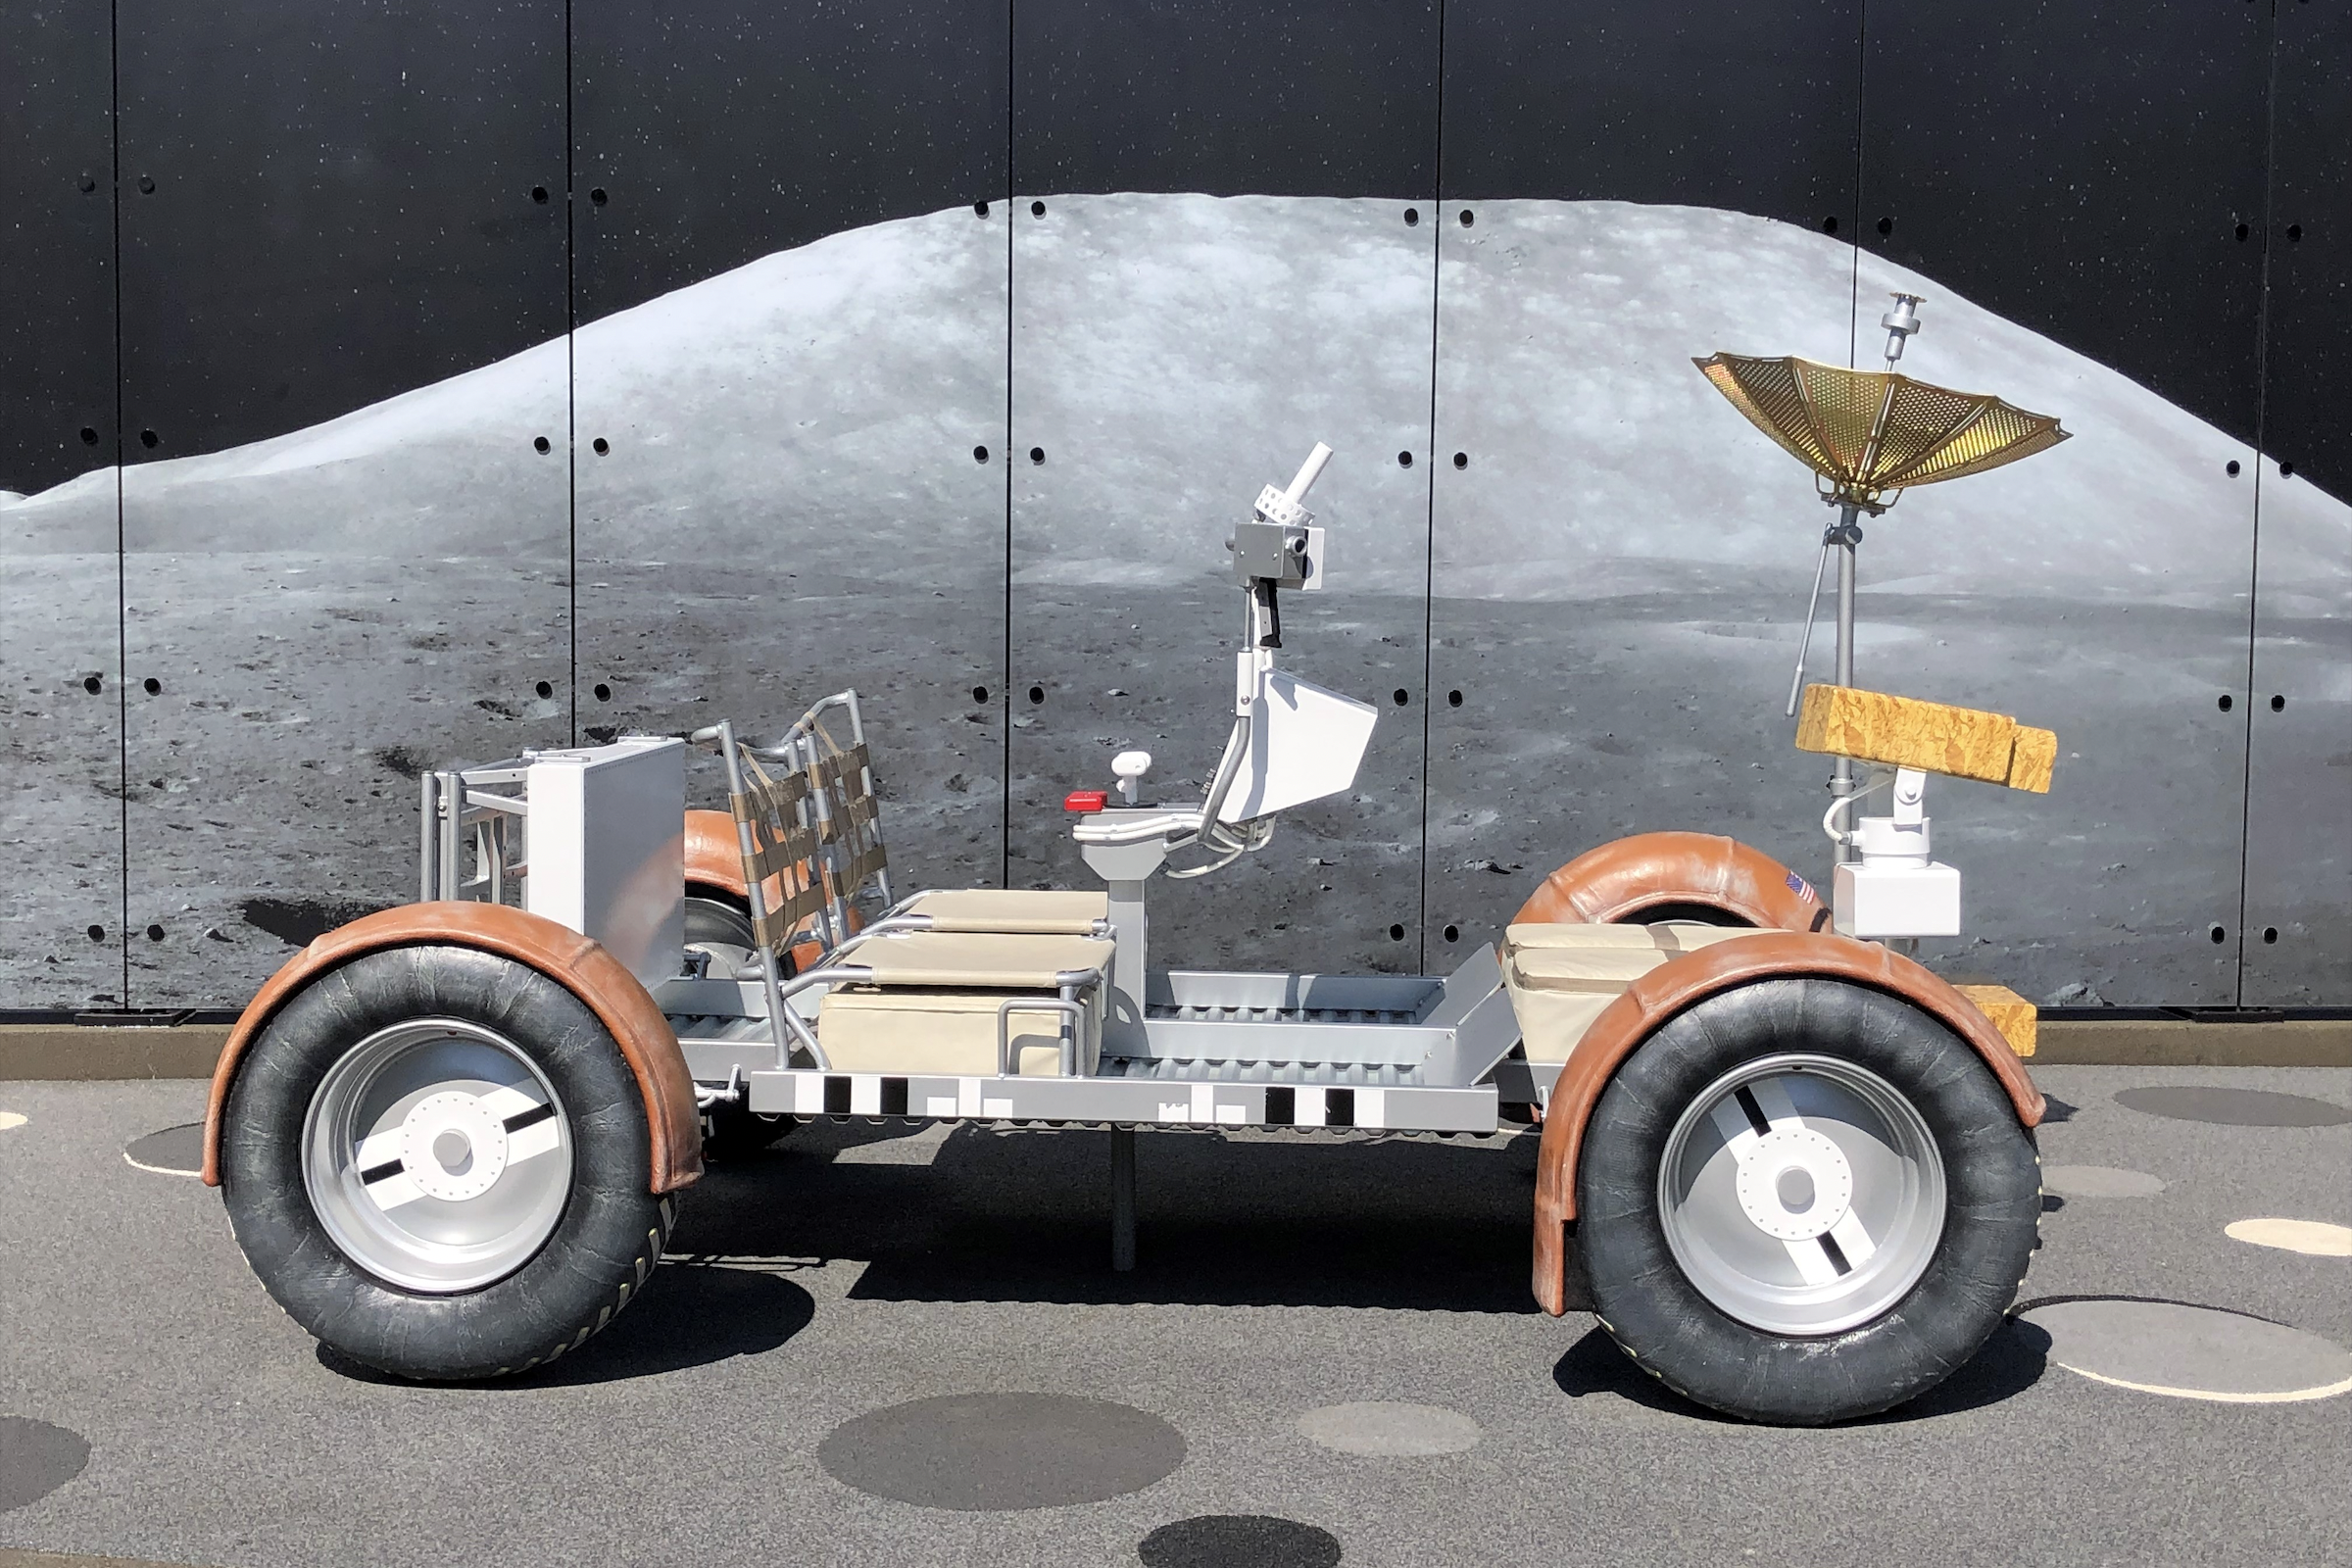 Replica Lunar Rover at Kherson Park in Kent, Washington.